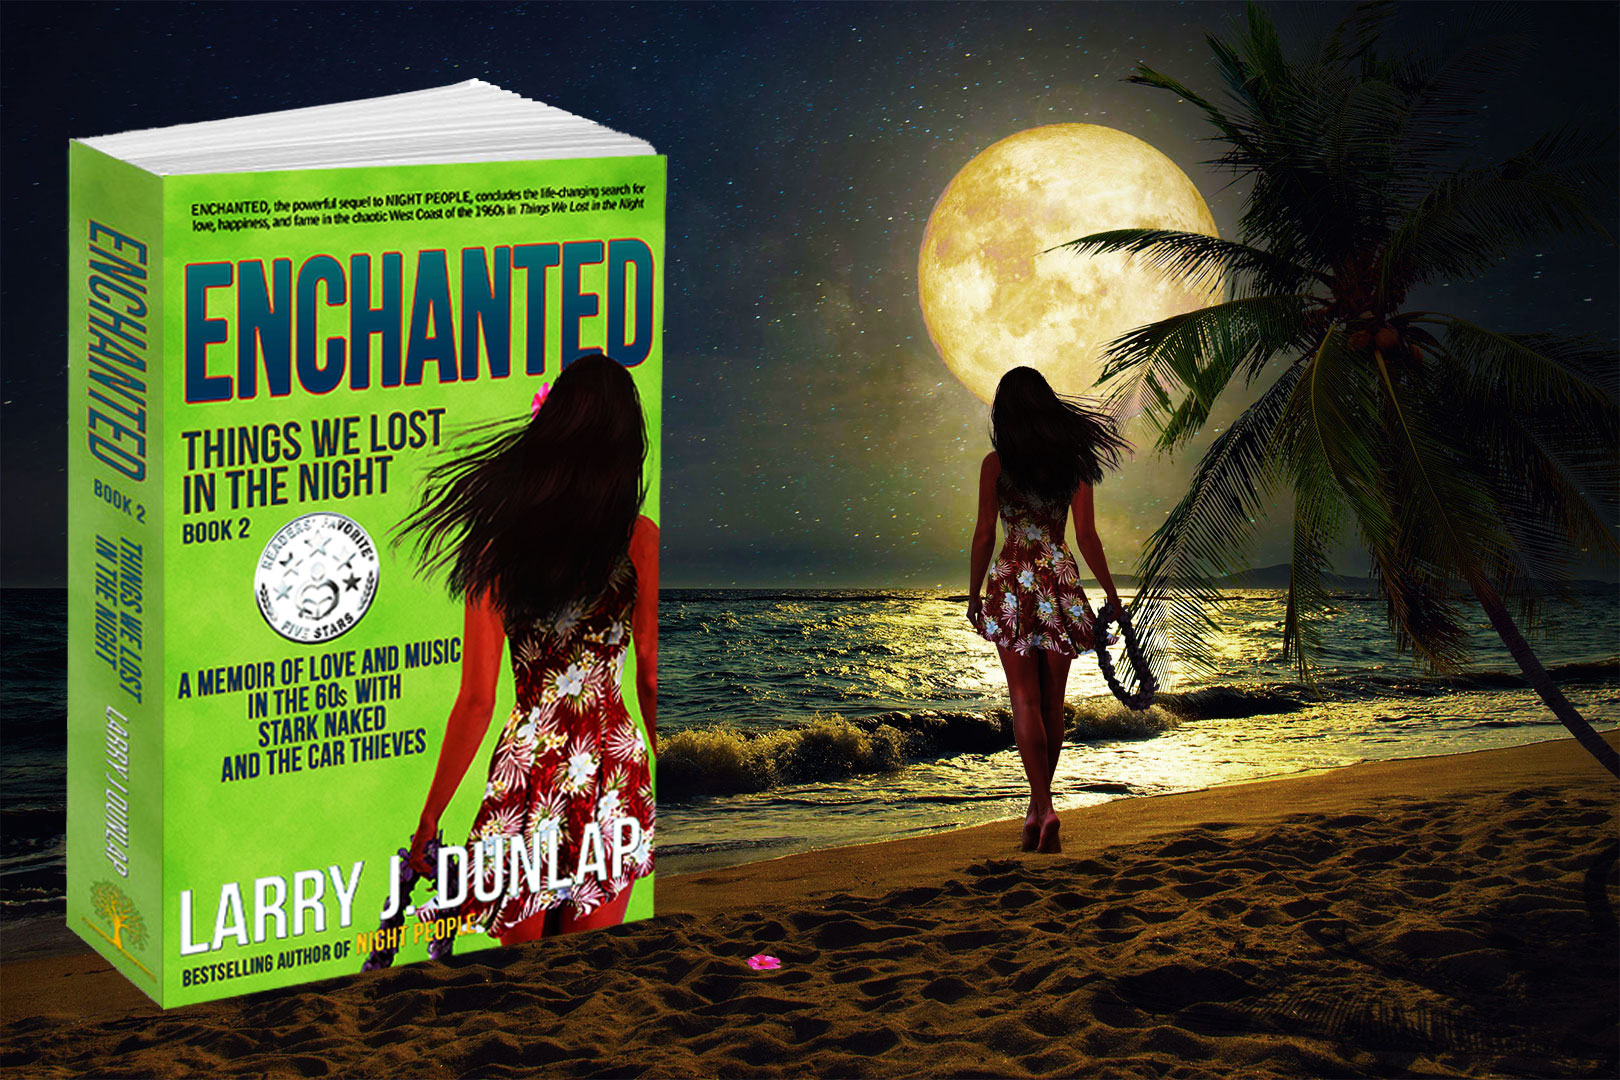 The book ENCHANTED and a Hawaiian girl walking away on a lonely beach in Hawaii.